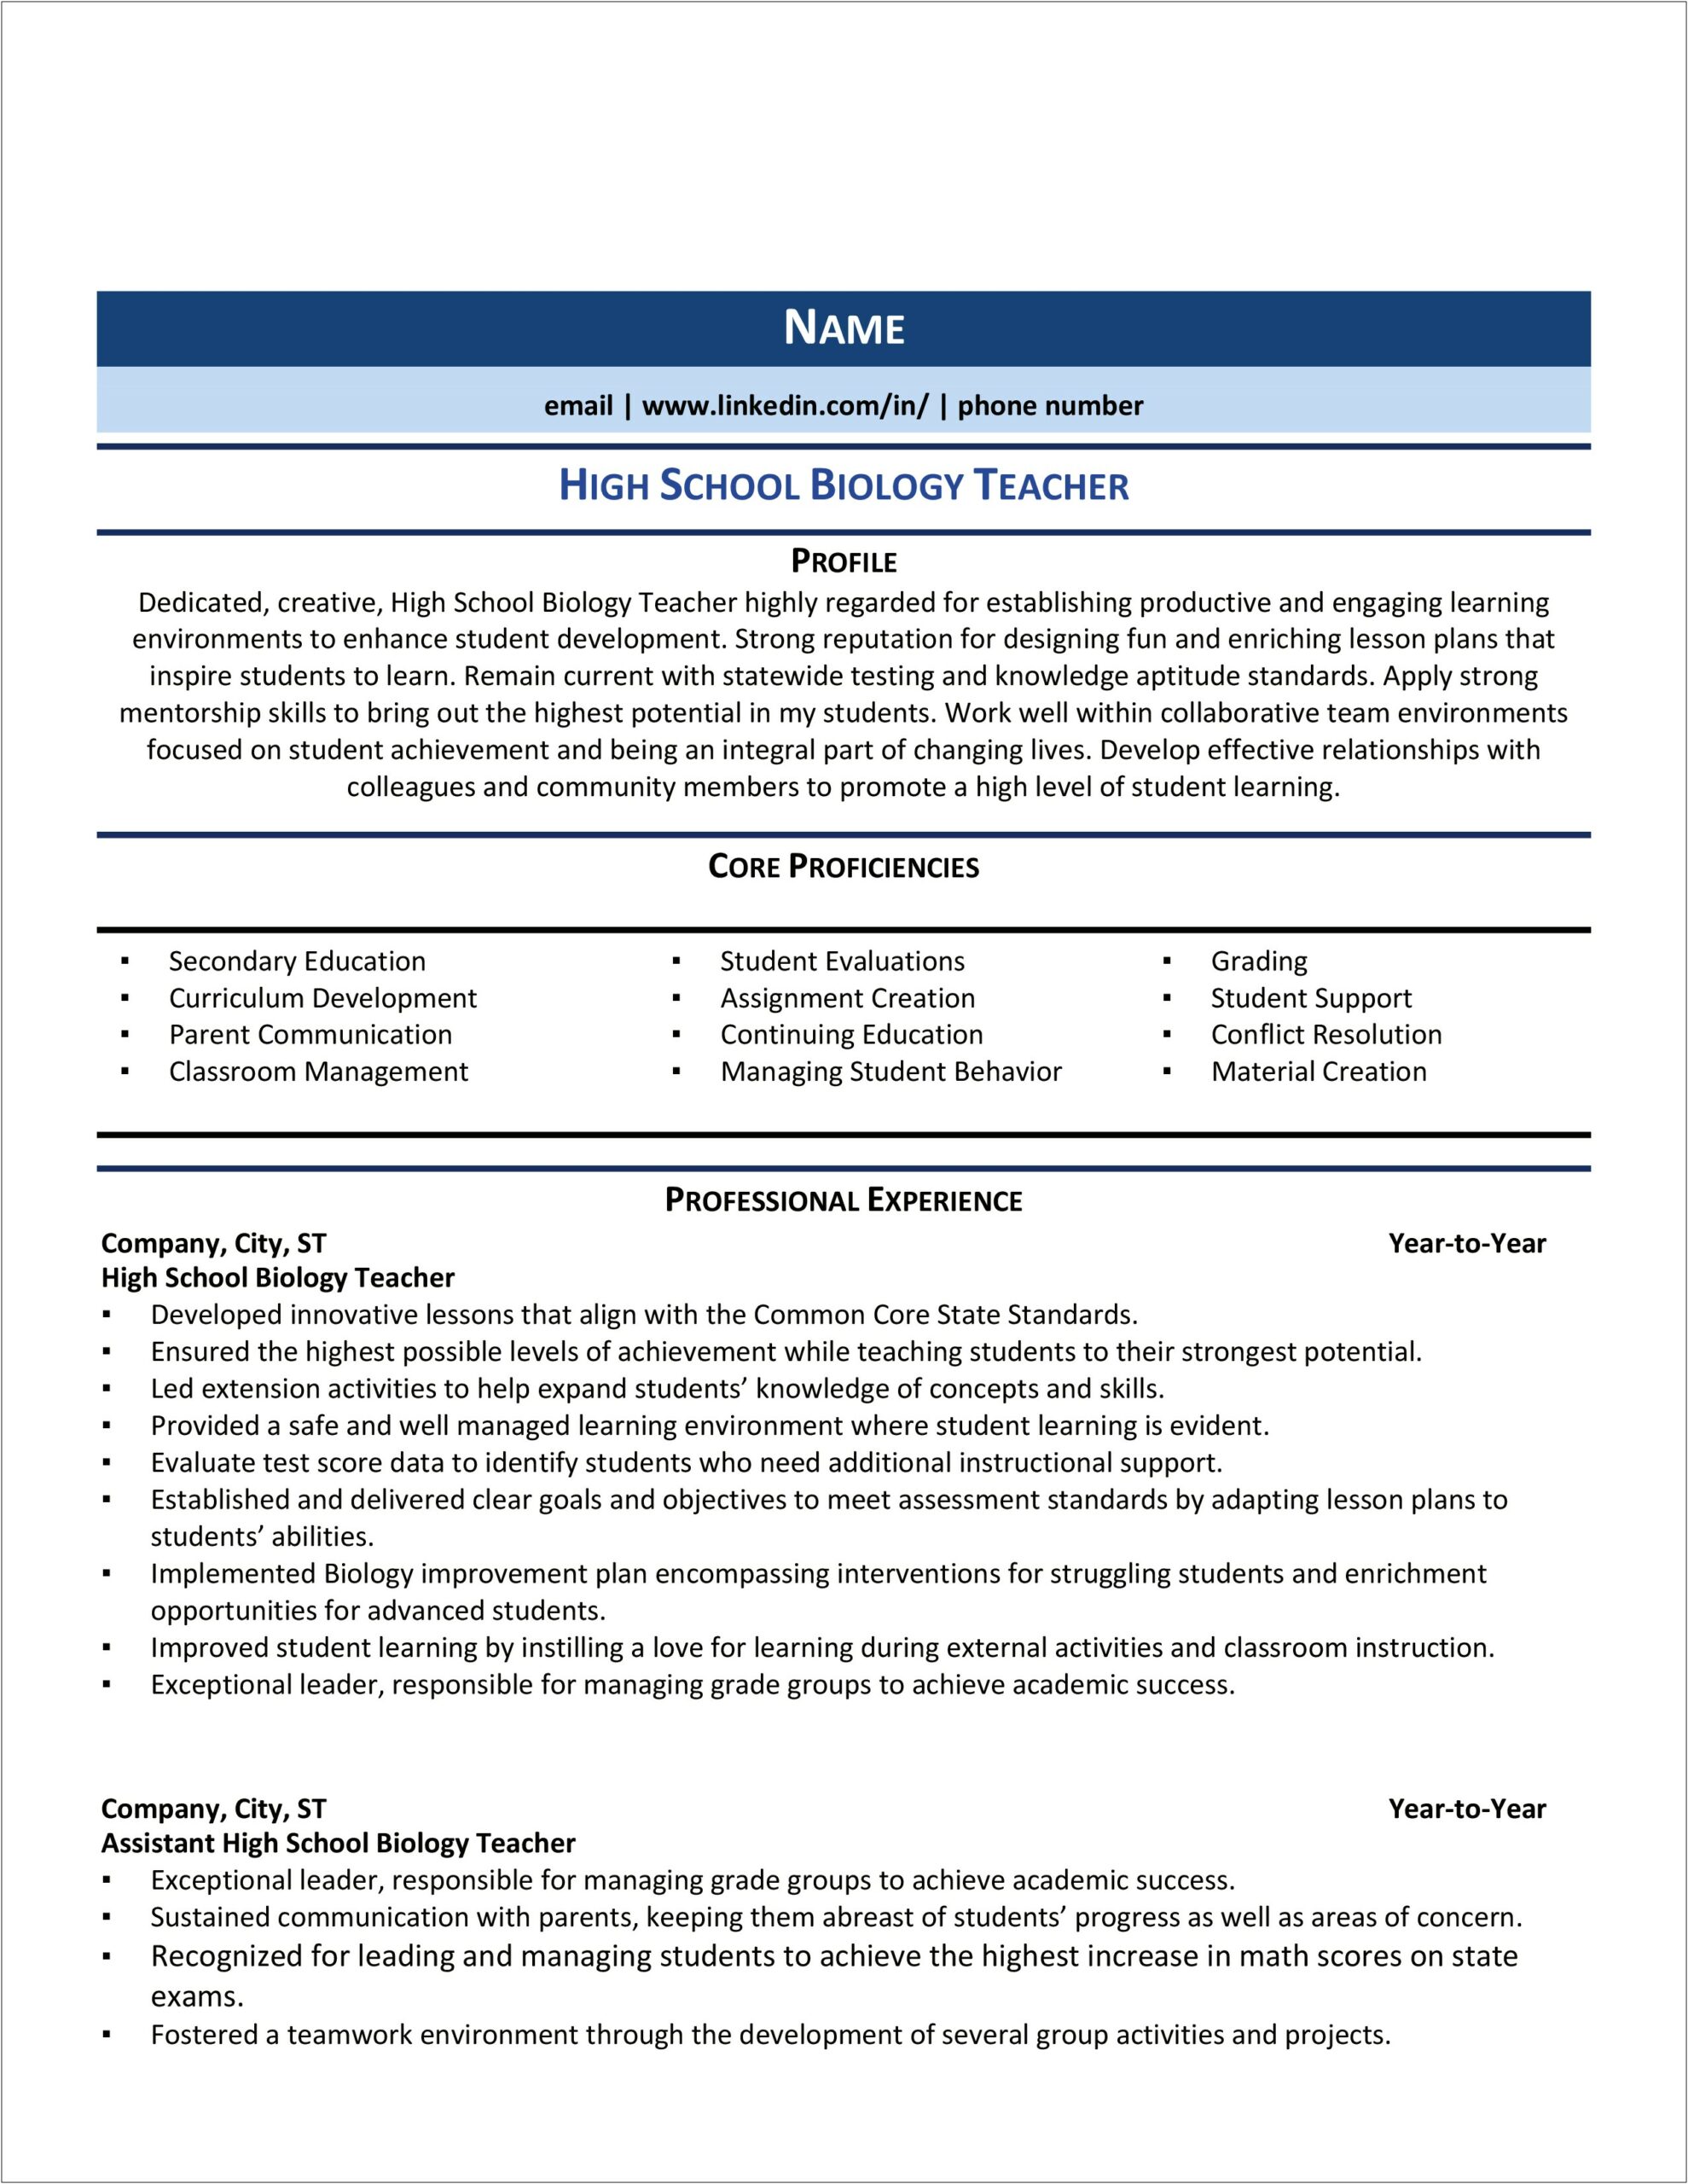 Resume Format For High School Math Teacher Objective